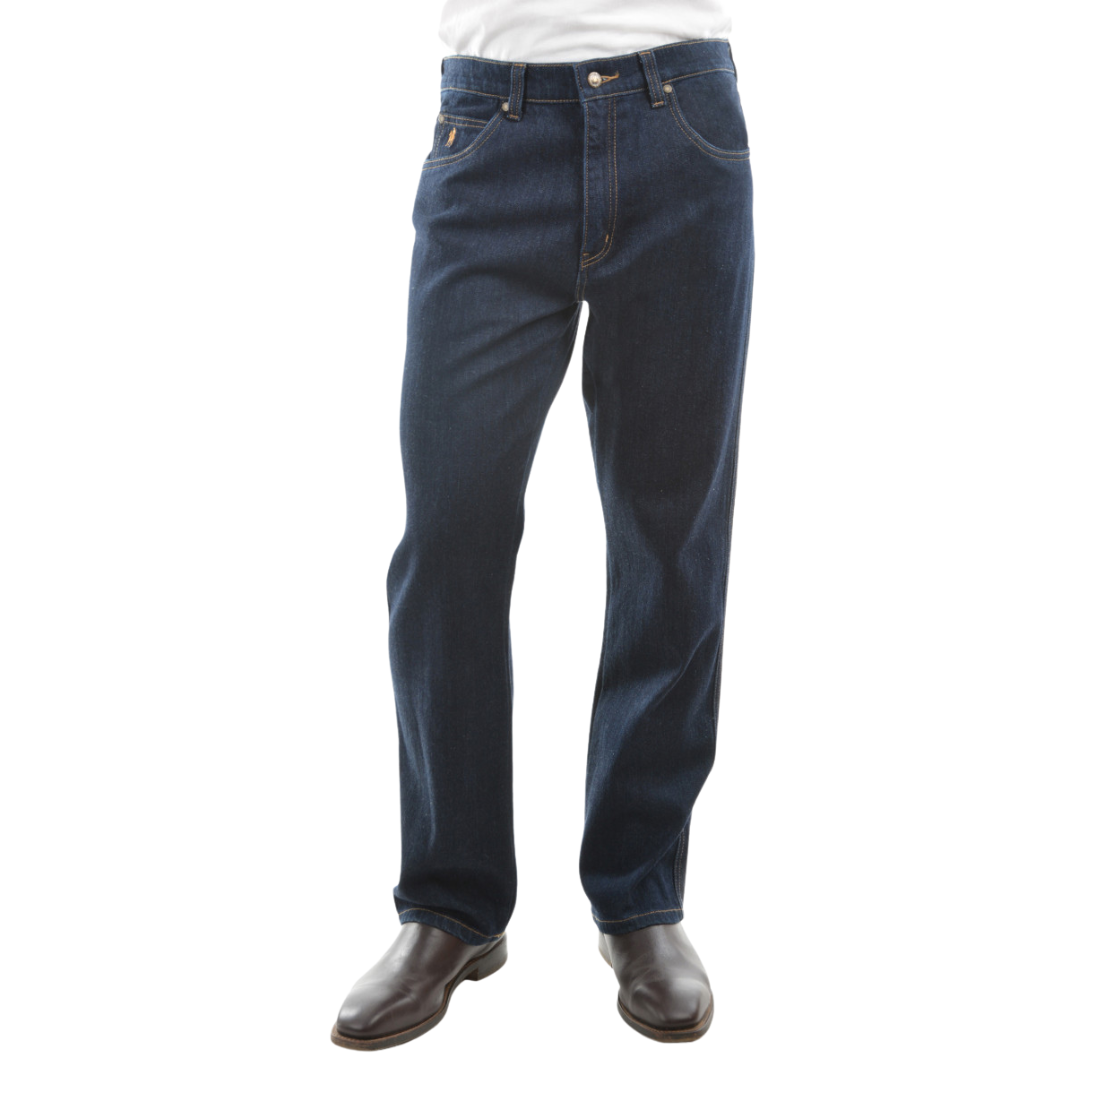 Comfort Waist Jean Regular Leg 32 Indigo Blu Menswear Fashion - Mature by Thomas Cook | The Bloke Shop